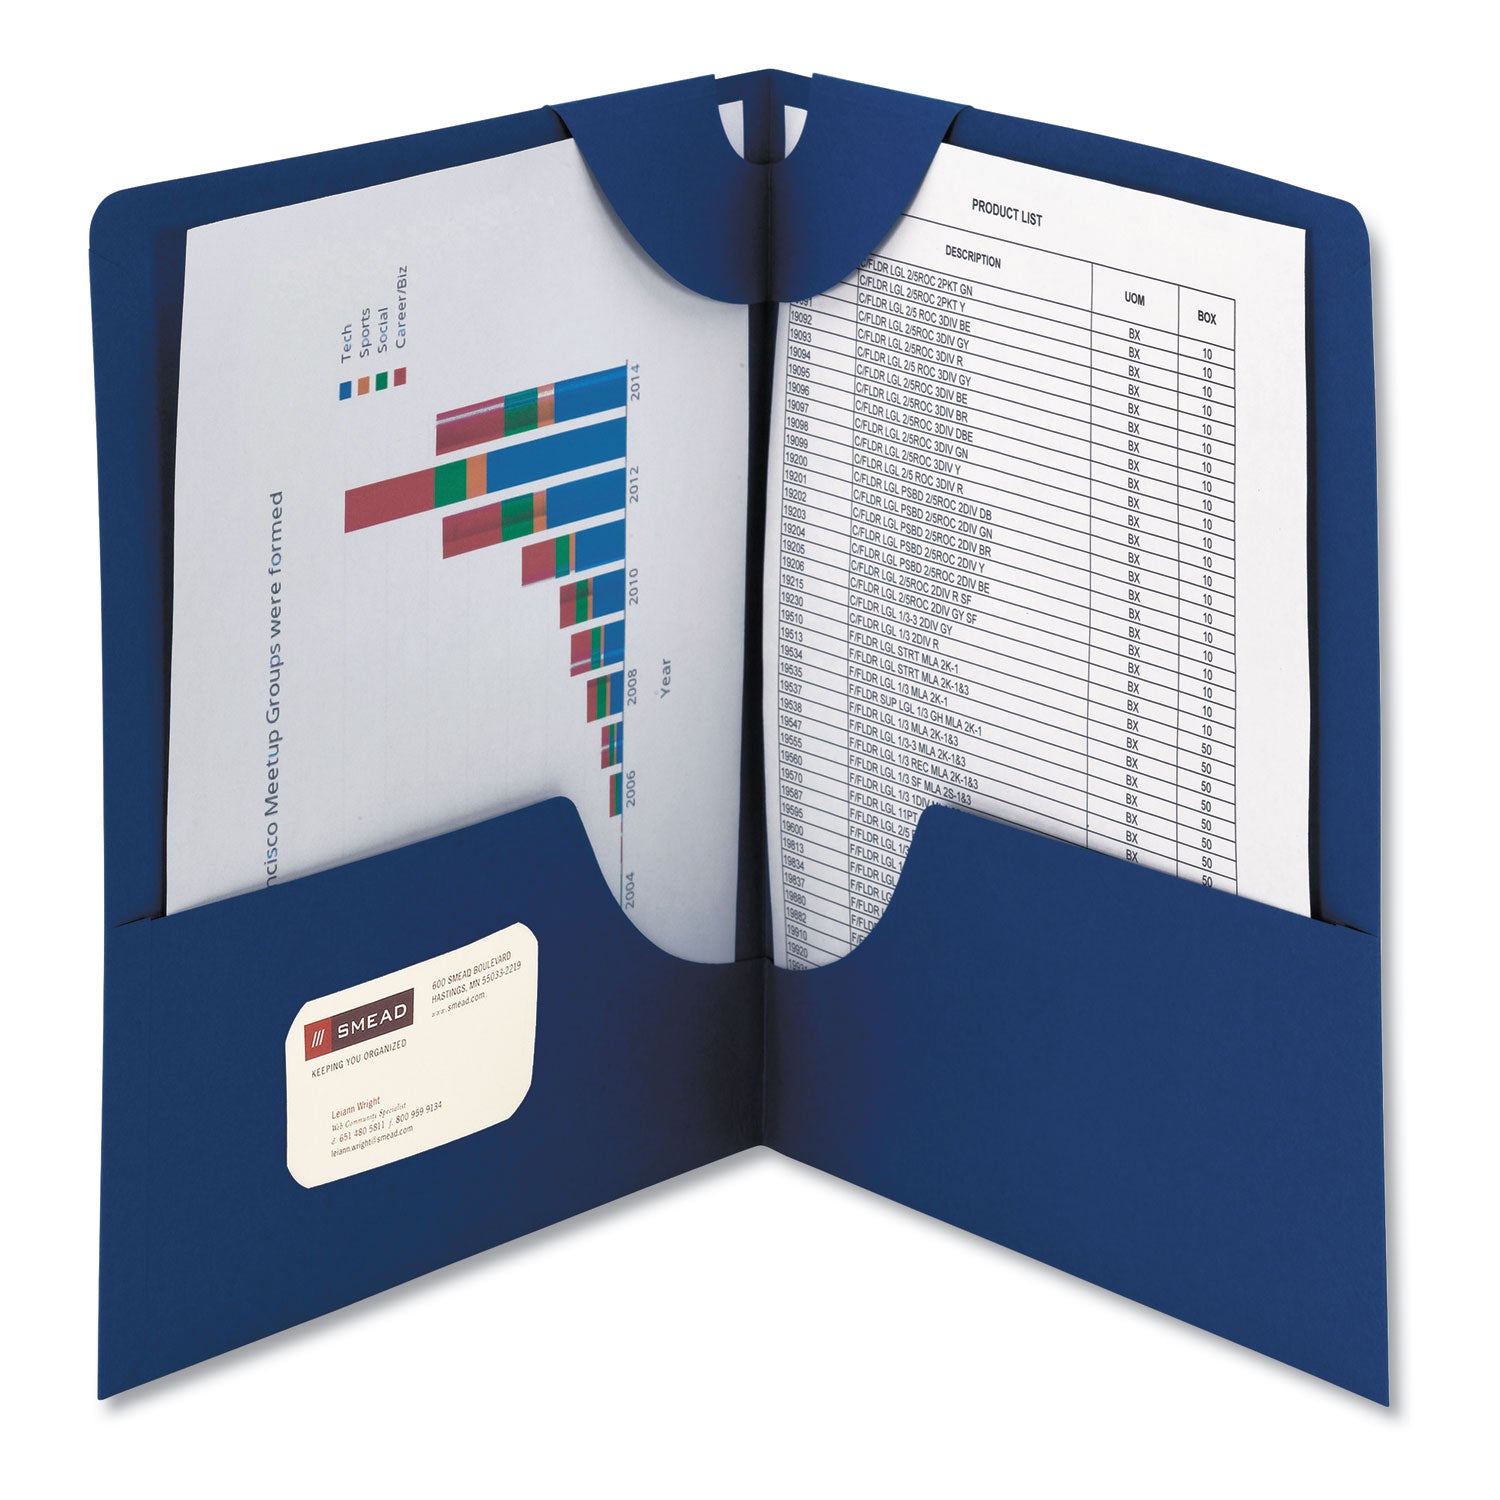 Lockit Two-Pocket Folder, Textured Paper, 100-Sheet Capacity, 11 x 8.5, Dark Blue, 25/Box - 